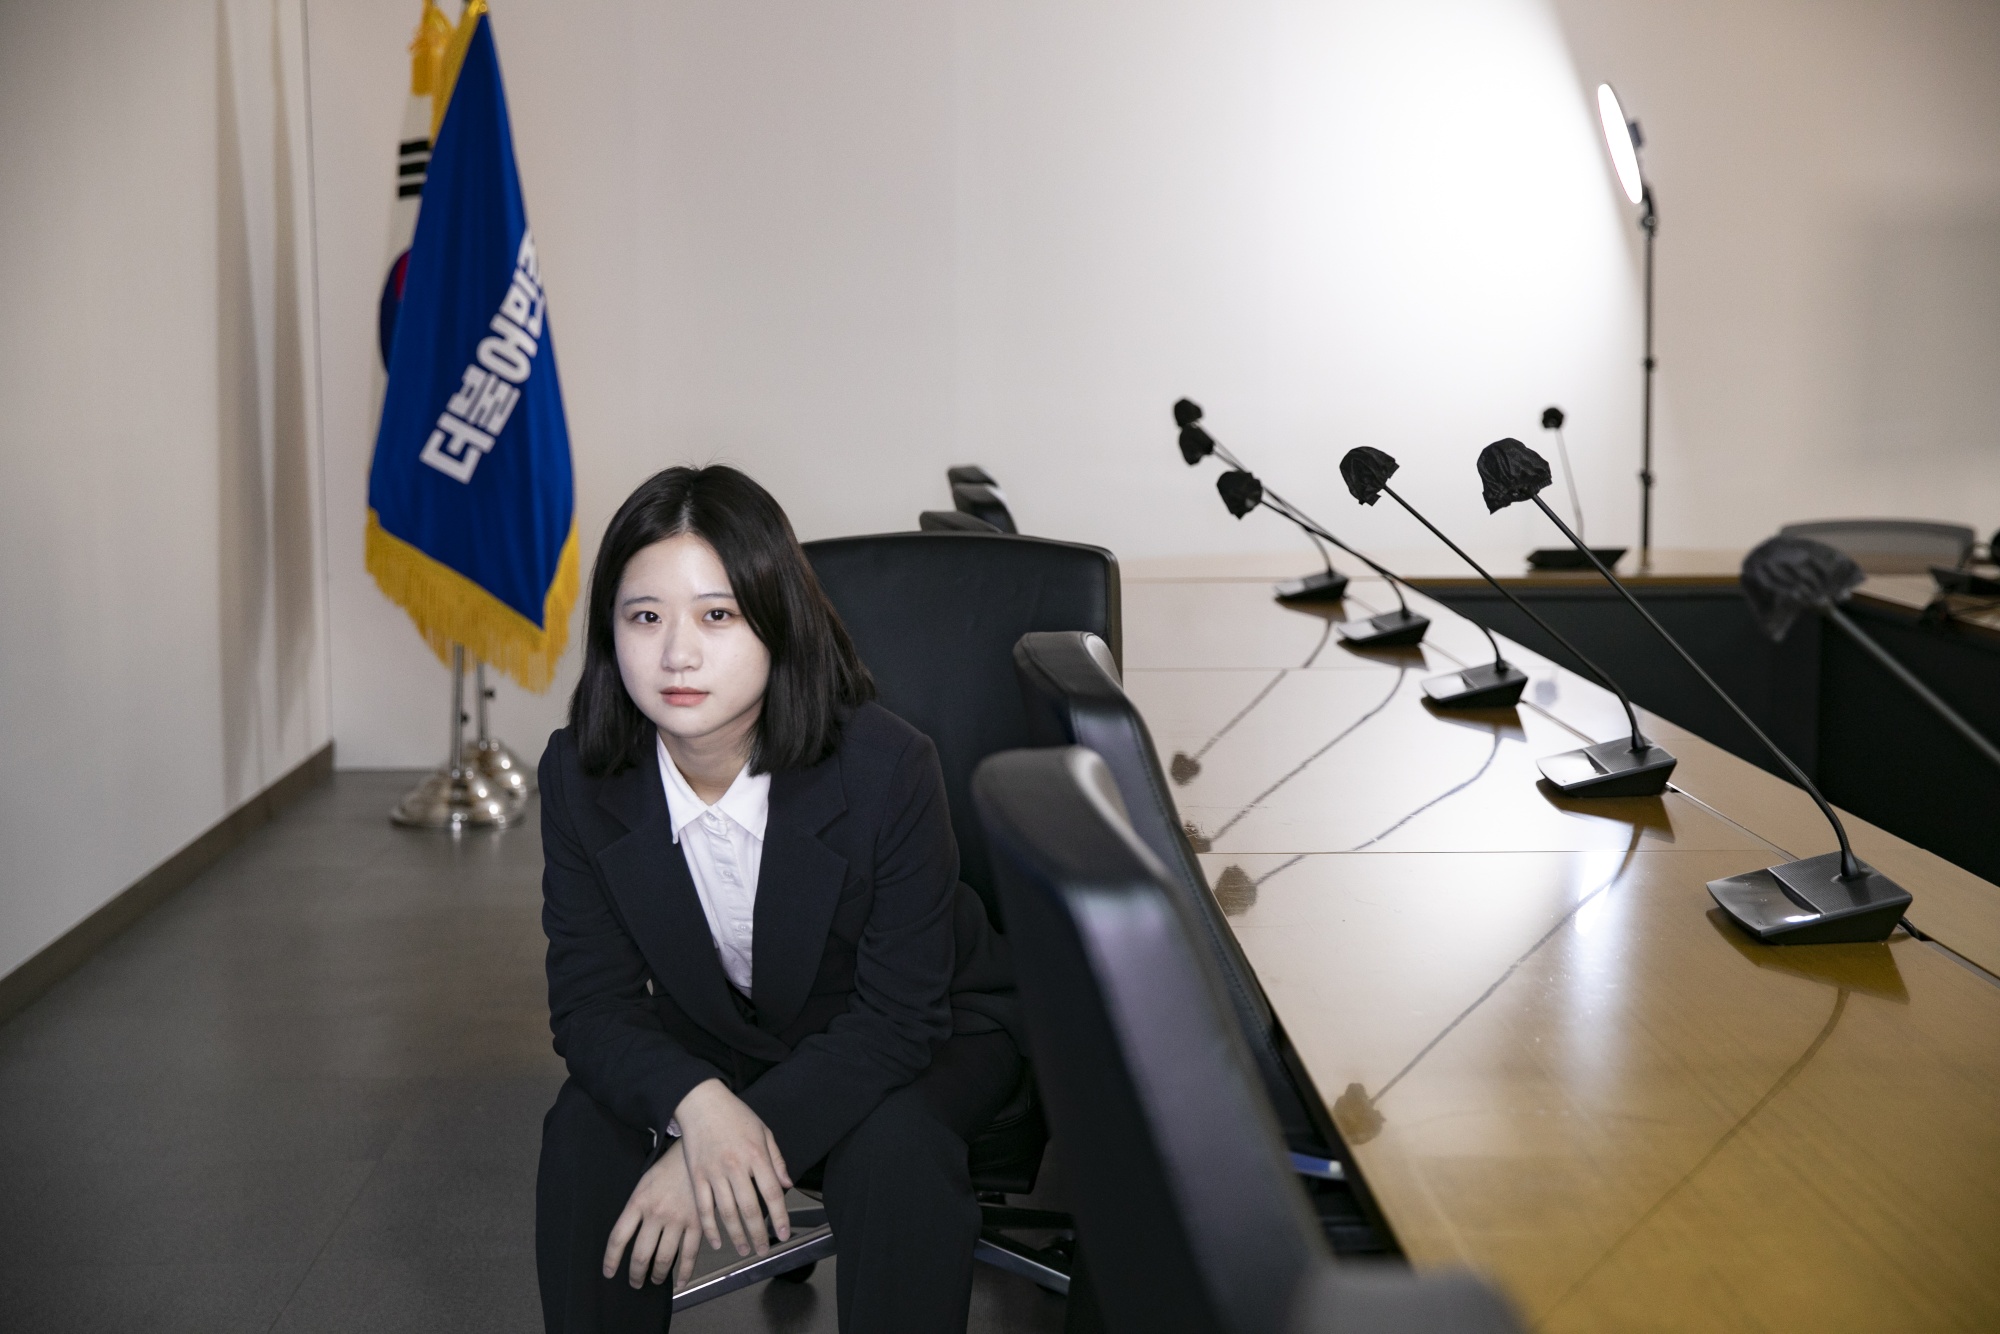 Korean Rape Xnxc All - Women's Rights Activist Is Taking on South Korea's President Yoon Suk Yeol  - Bloomberg